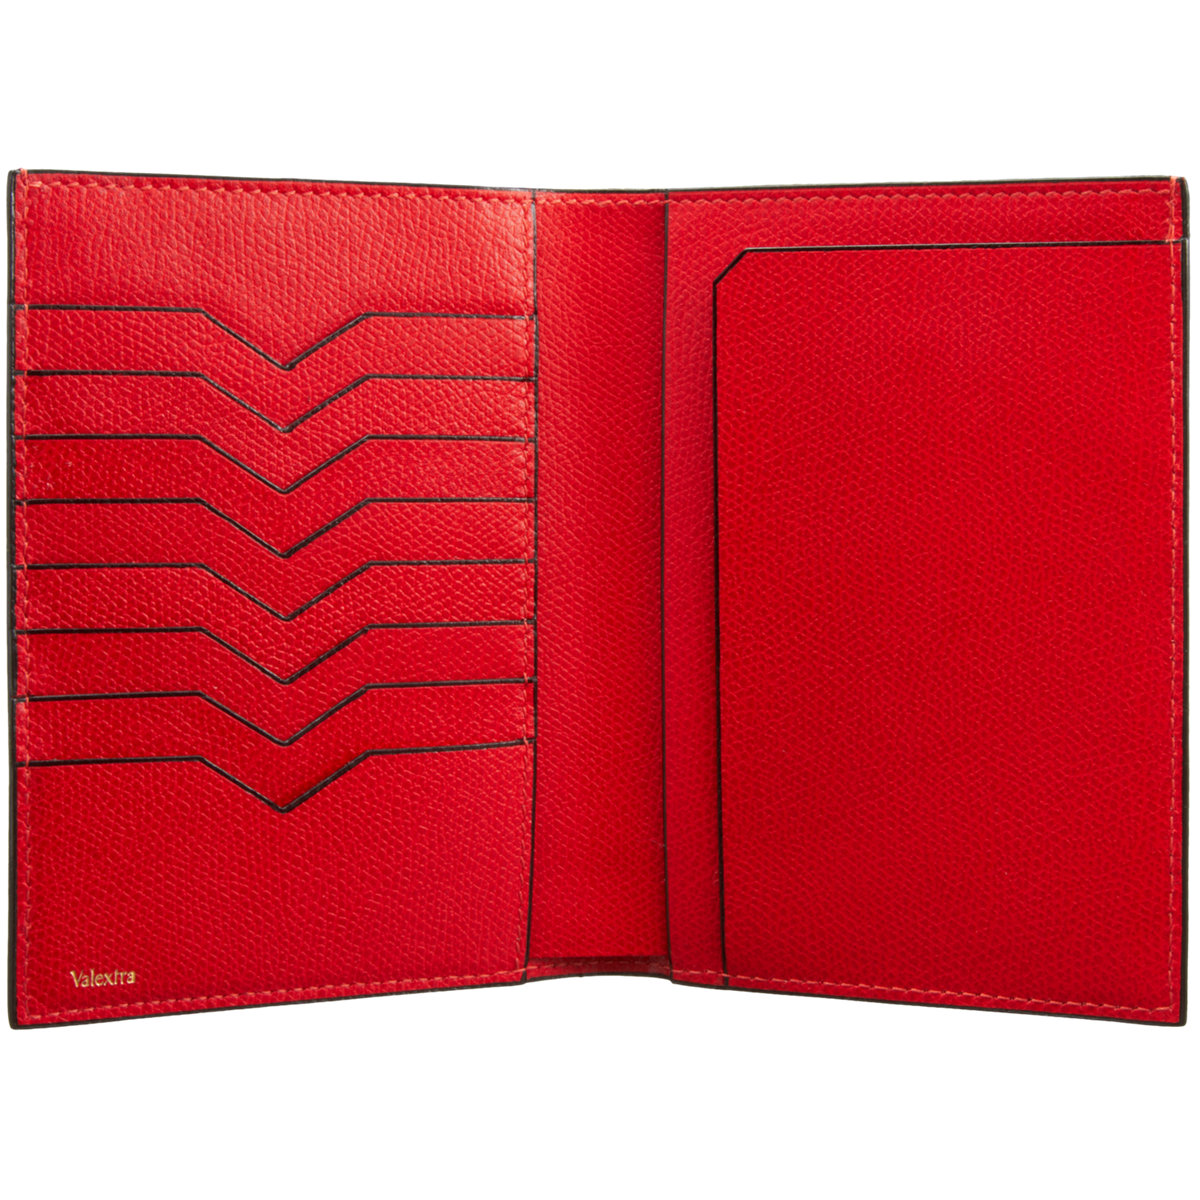 Valextra Passport Cover in Red (nero) | Lyst